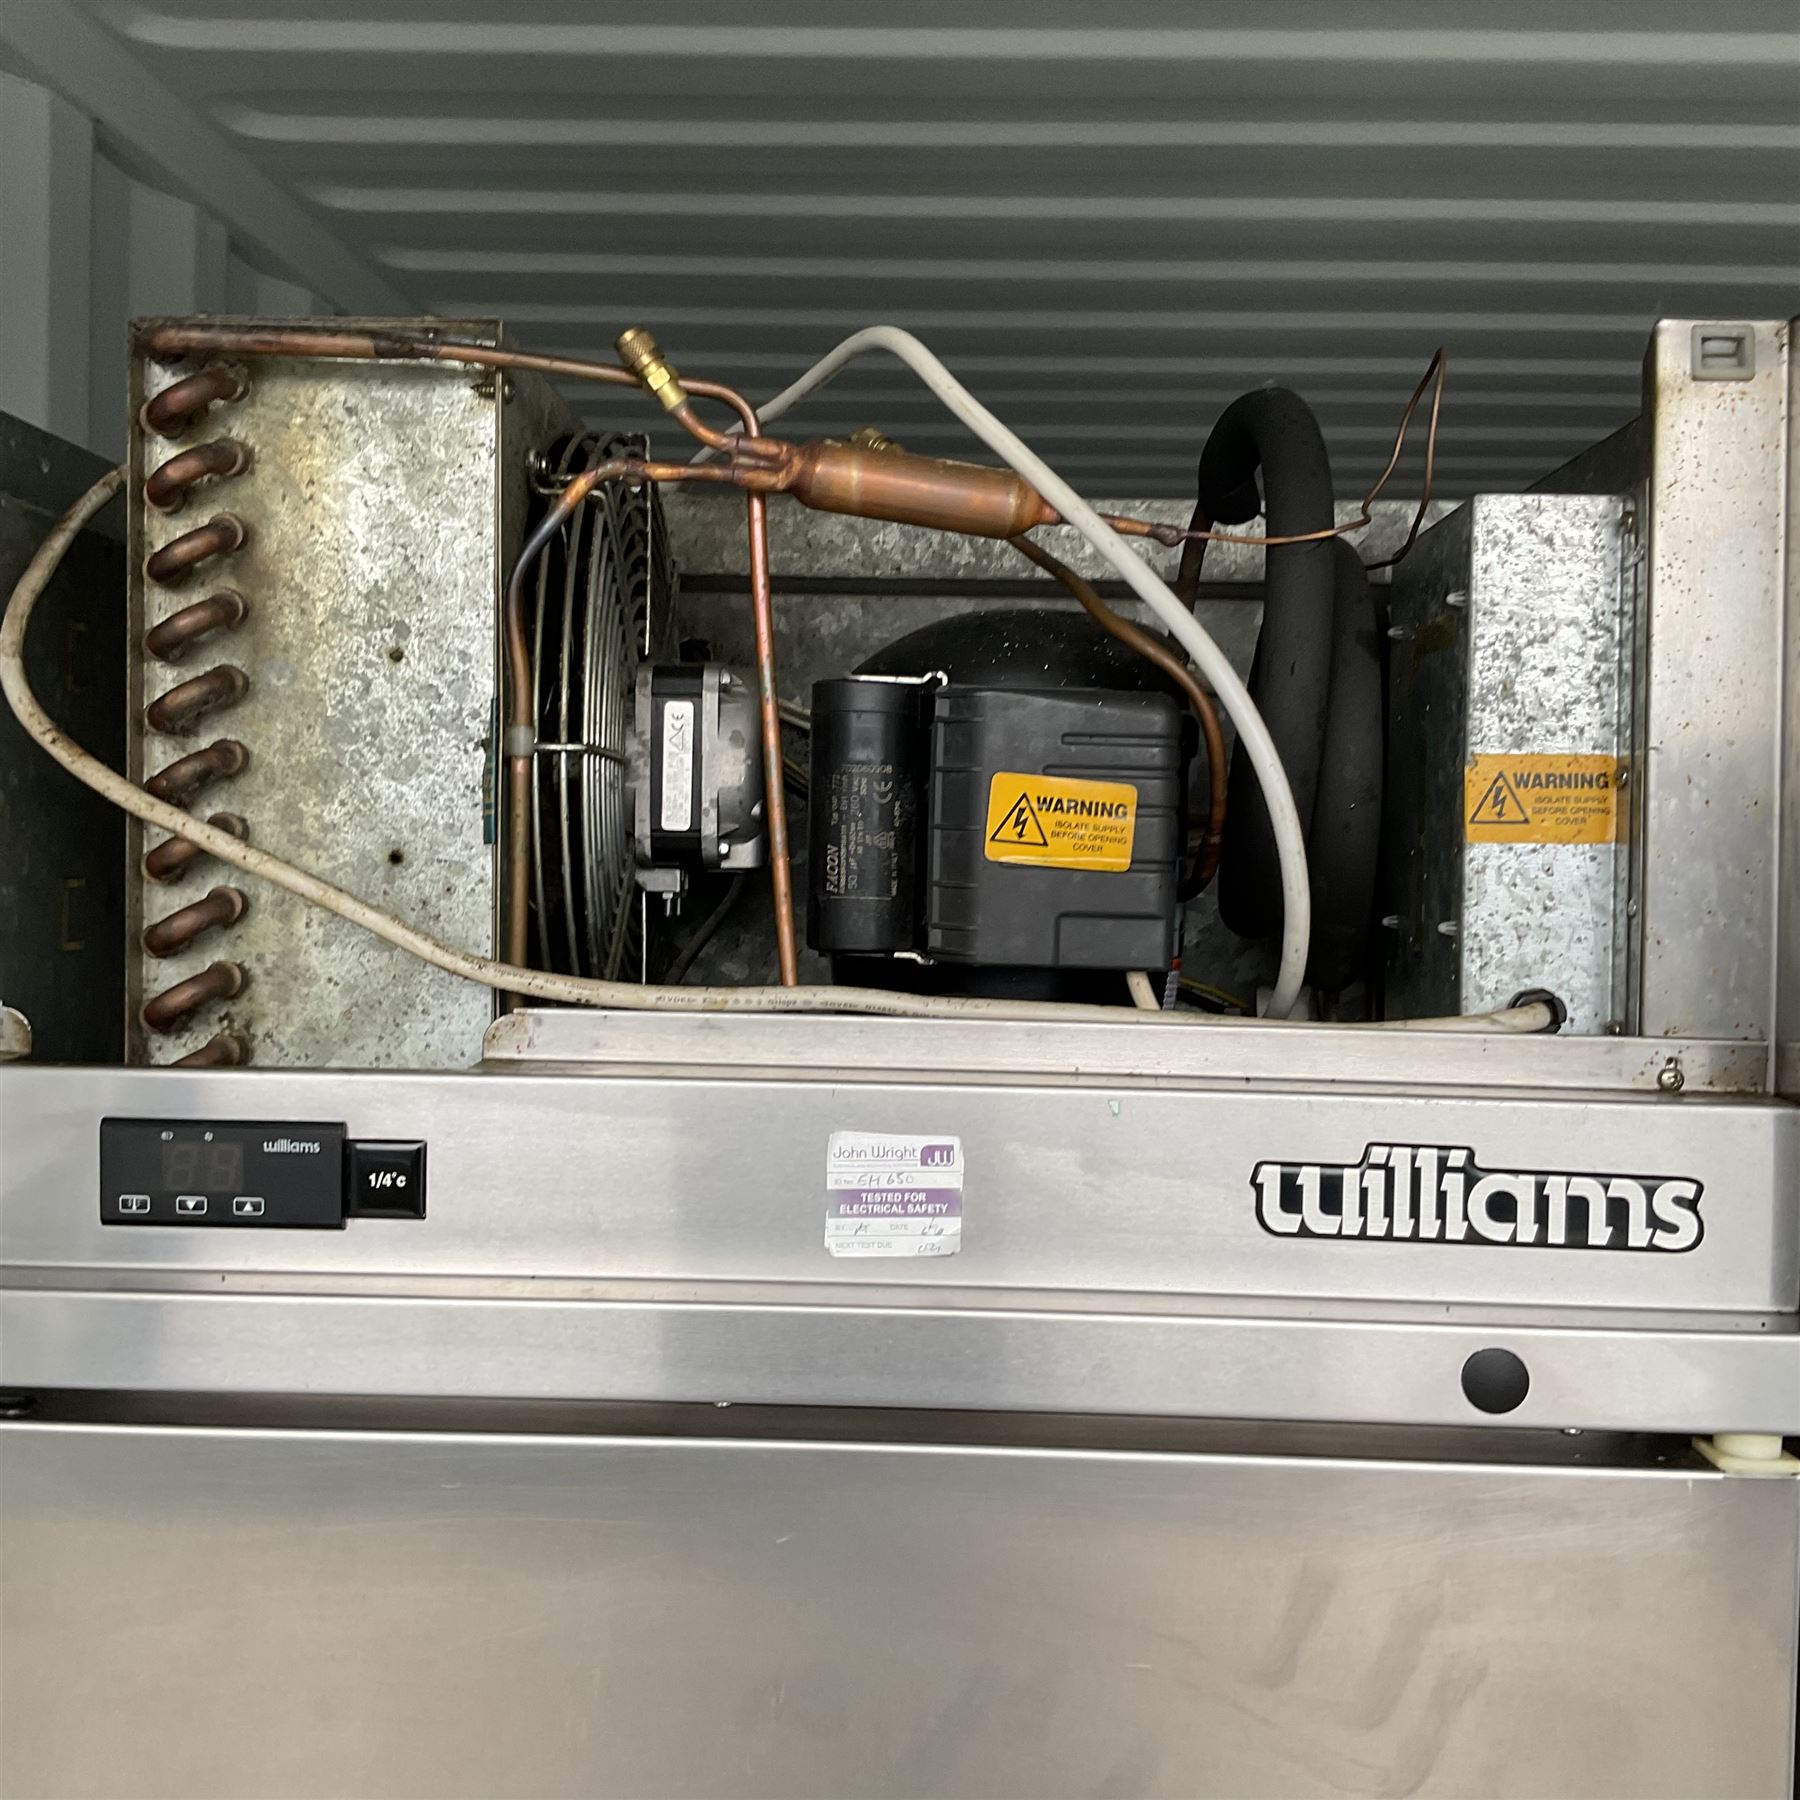 Williams HJ1SA commercial fridge - Image 5 of 6